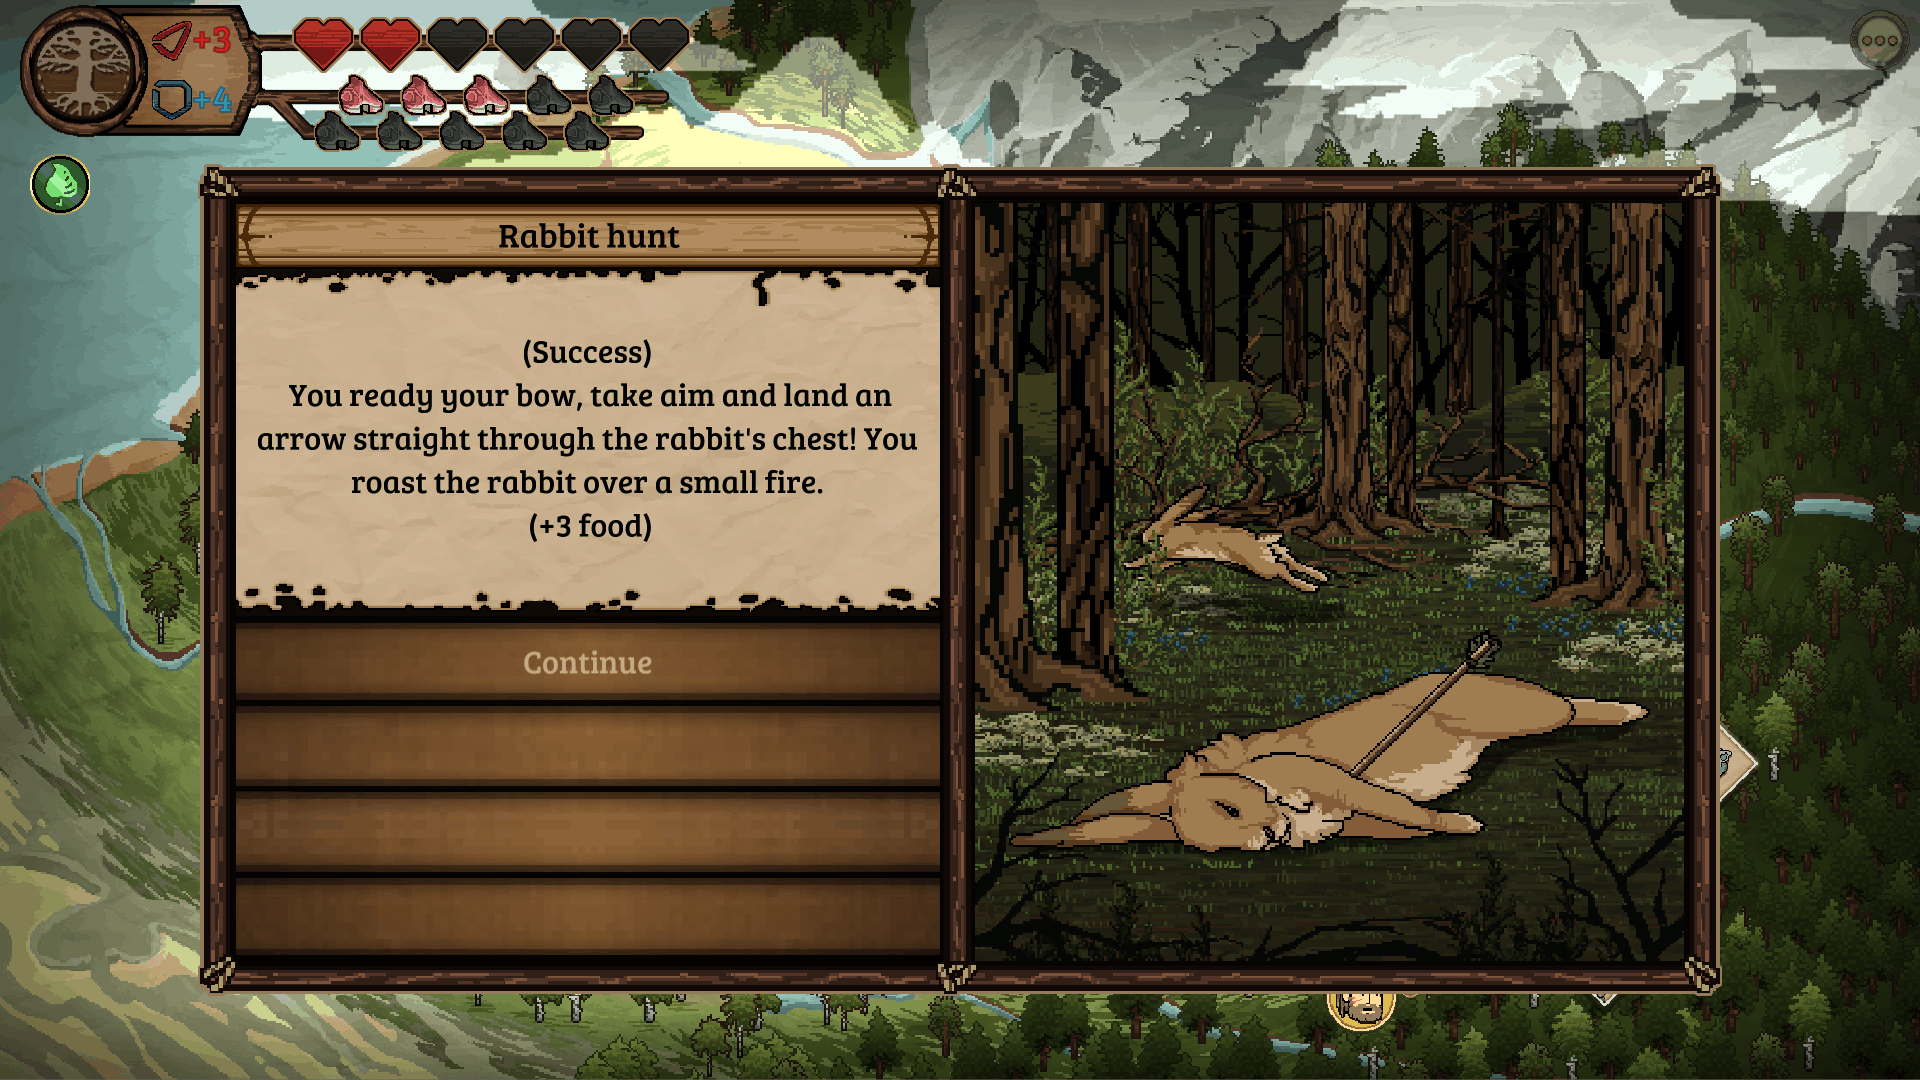 Please the Gods game screenshot, rabbit hunt